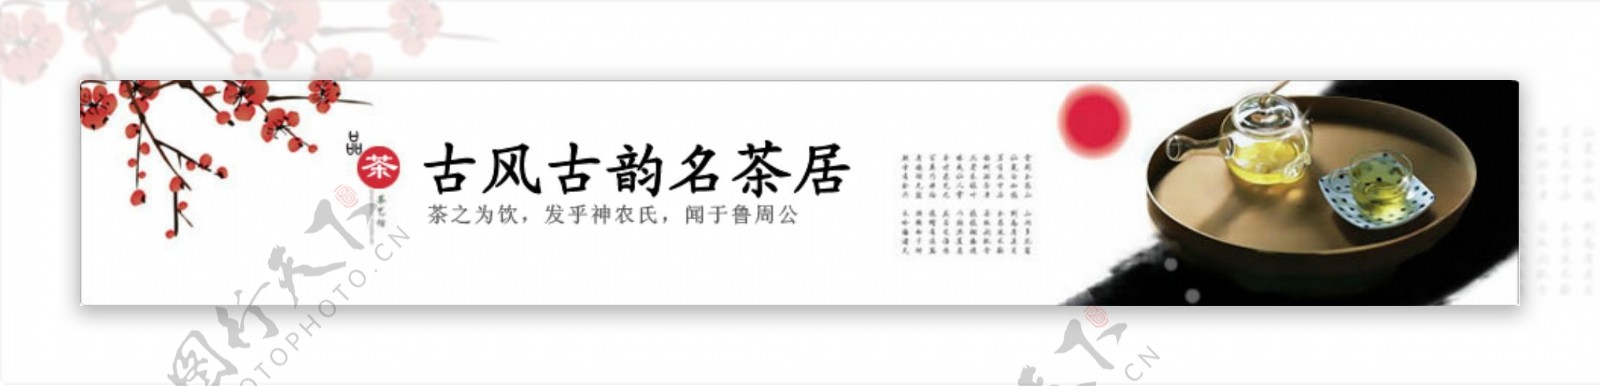 淘宝首页顶部logo区标签banner